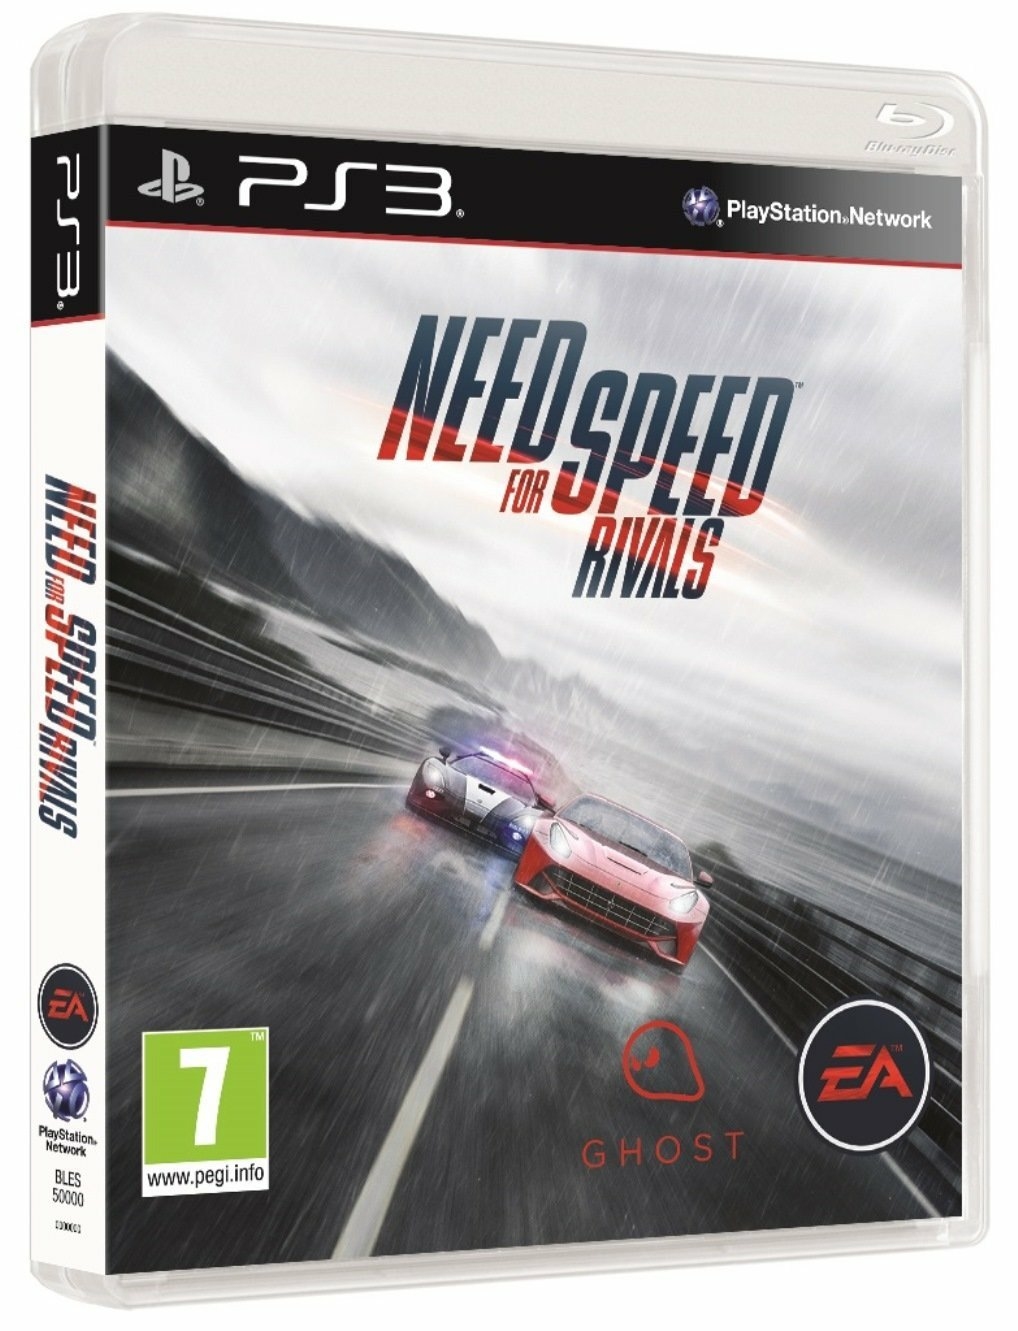 Нид фор спид пс. Need for Speed Rivals ps3. NFS 4 ps3. Ps3 диск need for Speed. Need for Speed Rivals ps3 русская версия.